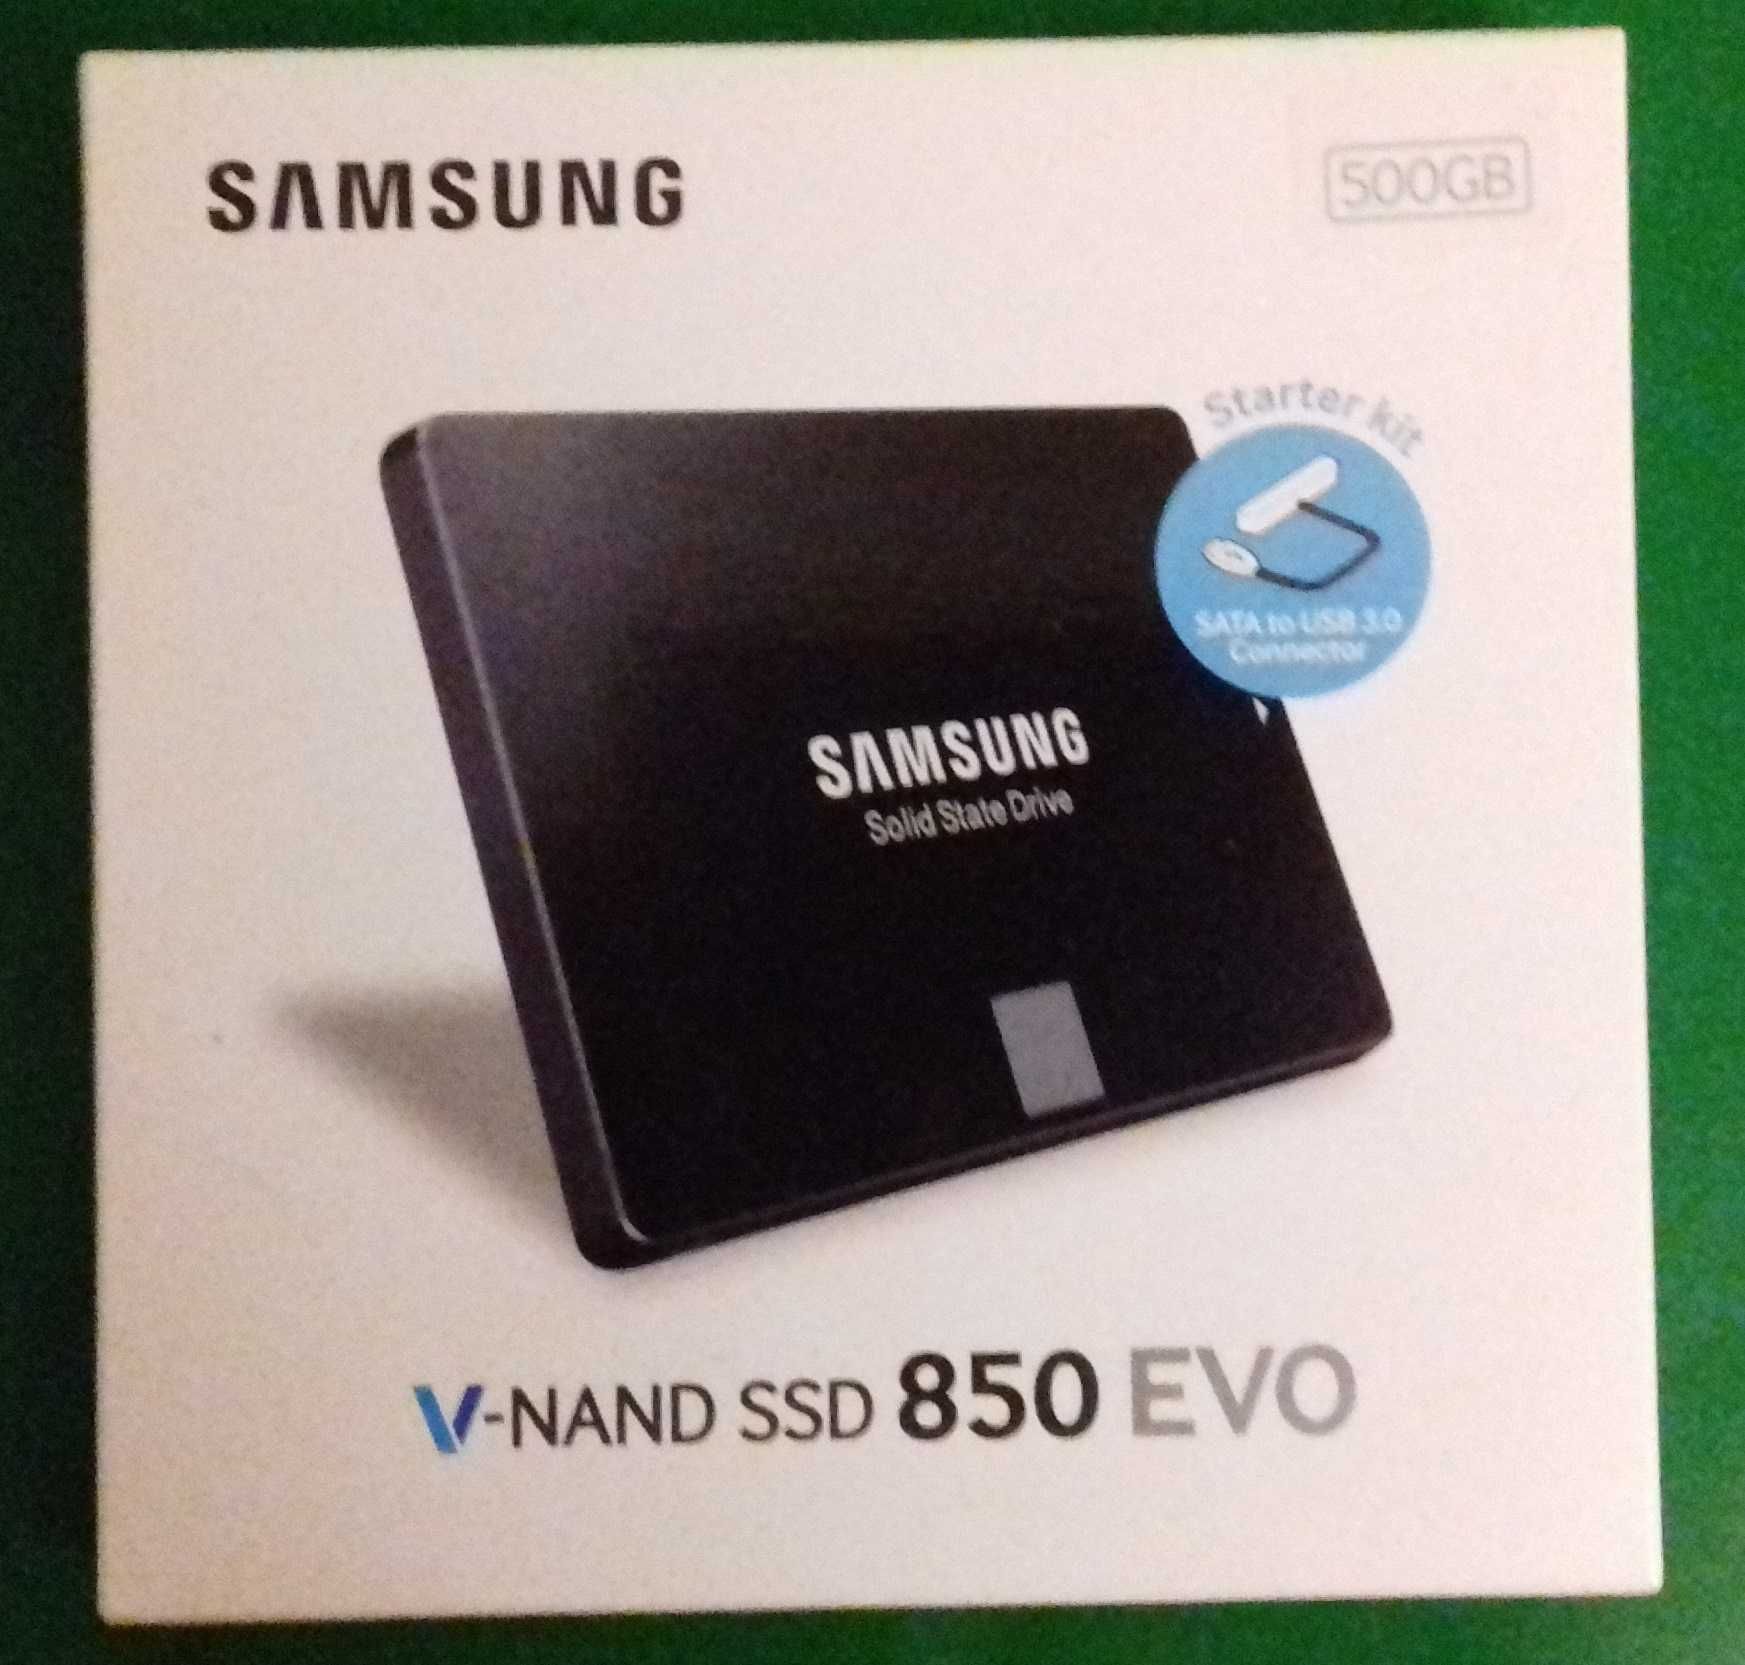 Dysk ssd- Samsung 860 EVO-1TB. Inne modele - foto